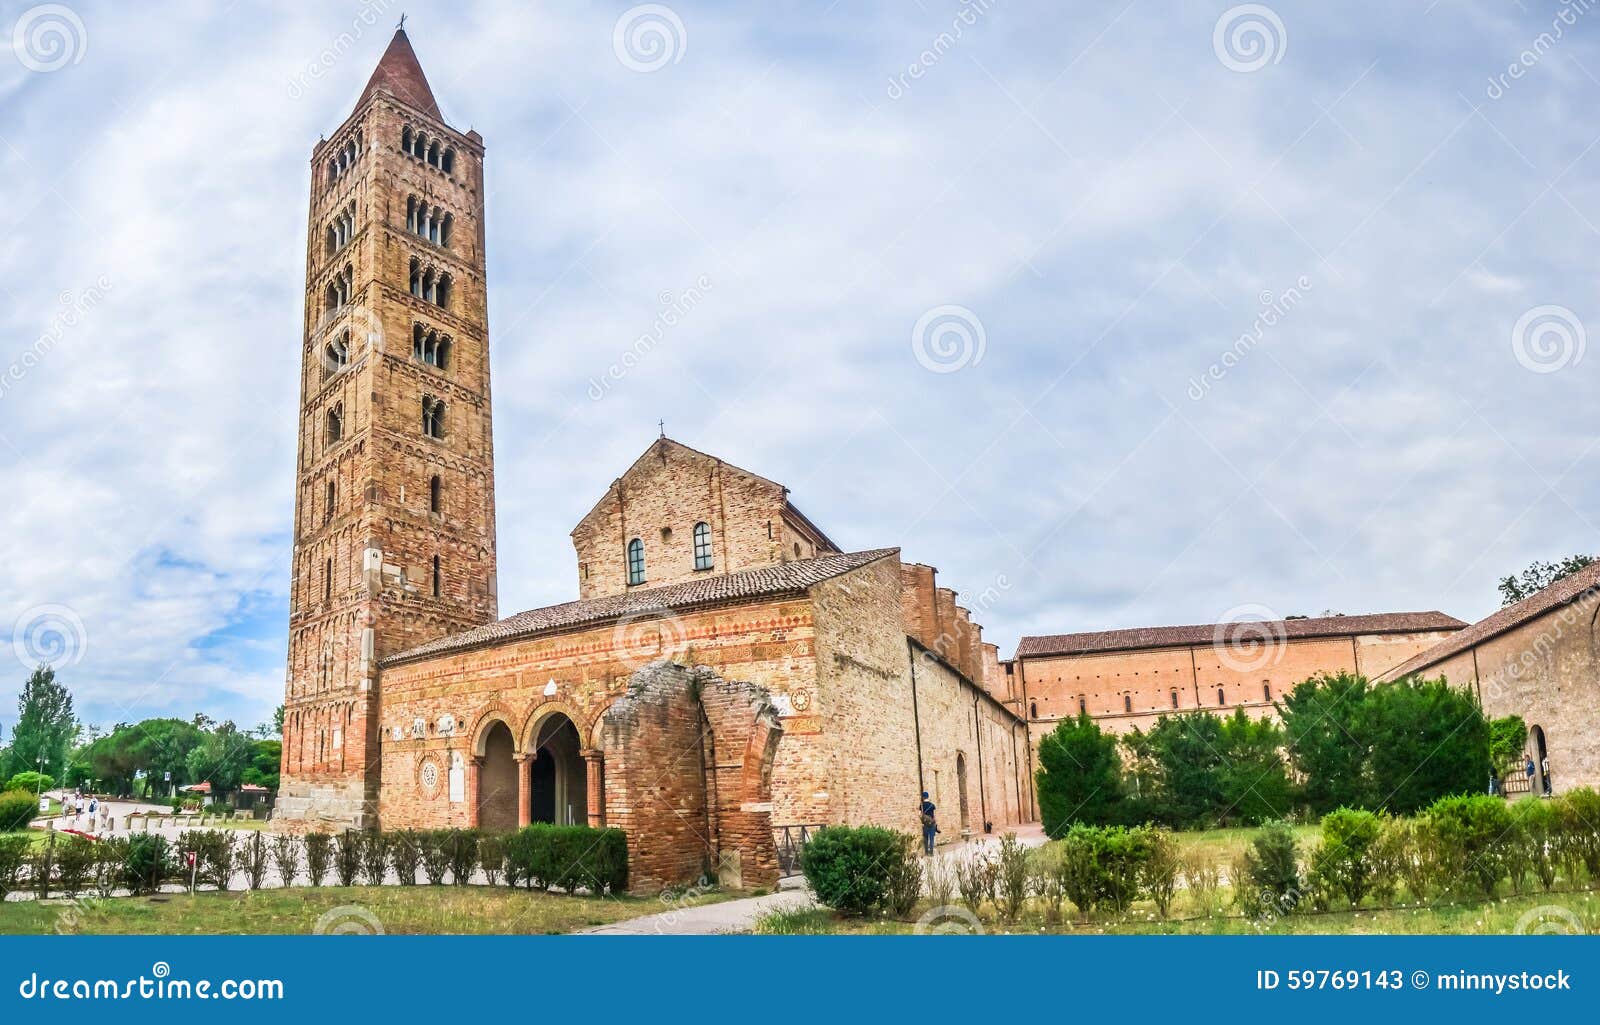 historic abbey of pomposa and famous monastery, codigoro, emilia-romagna, italy